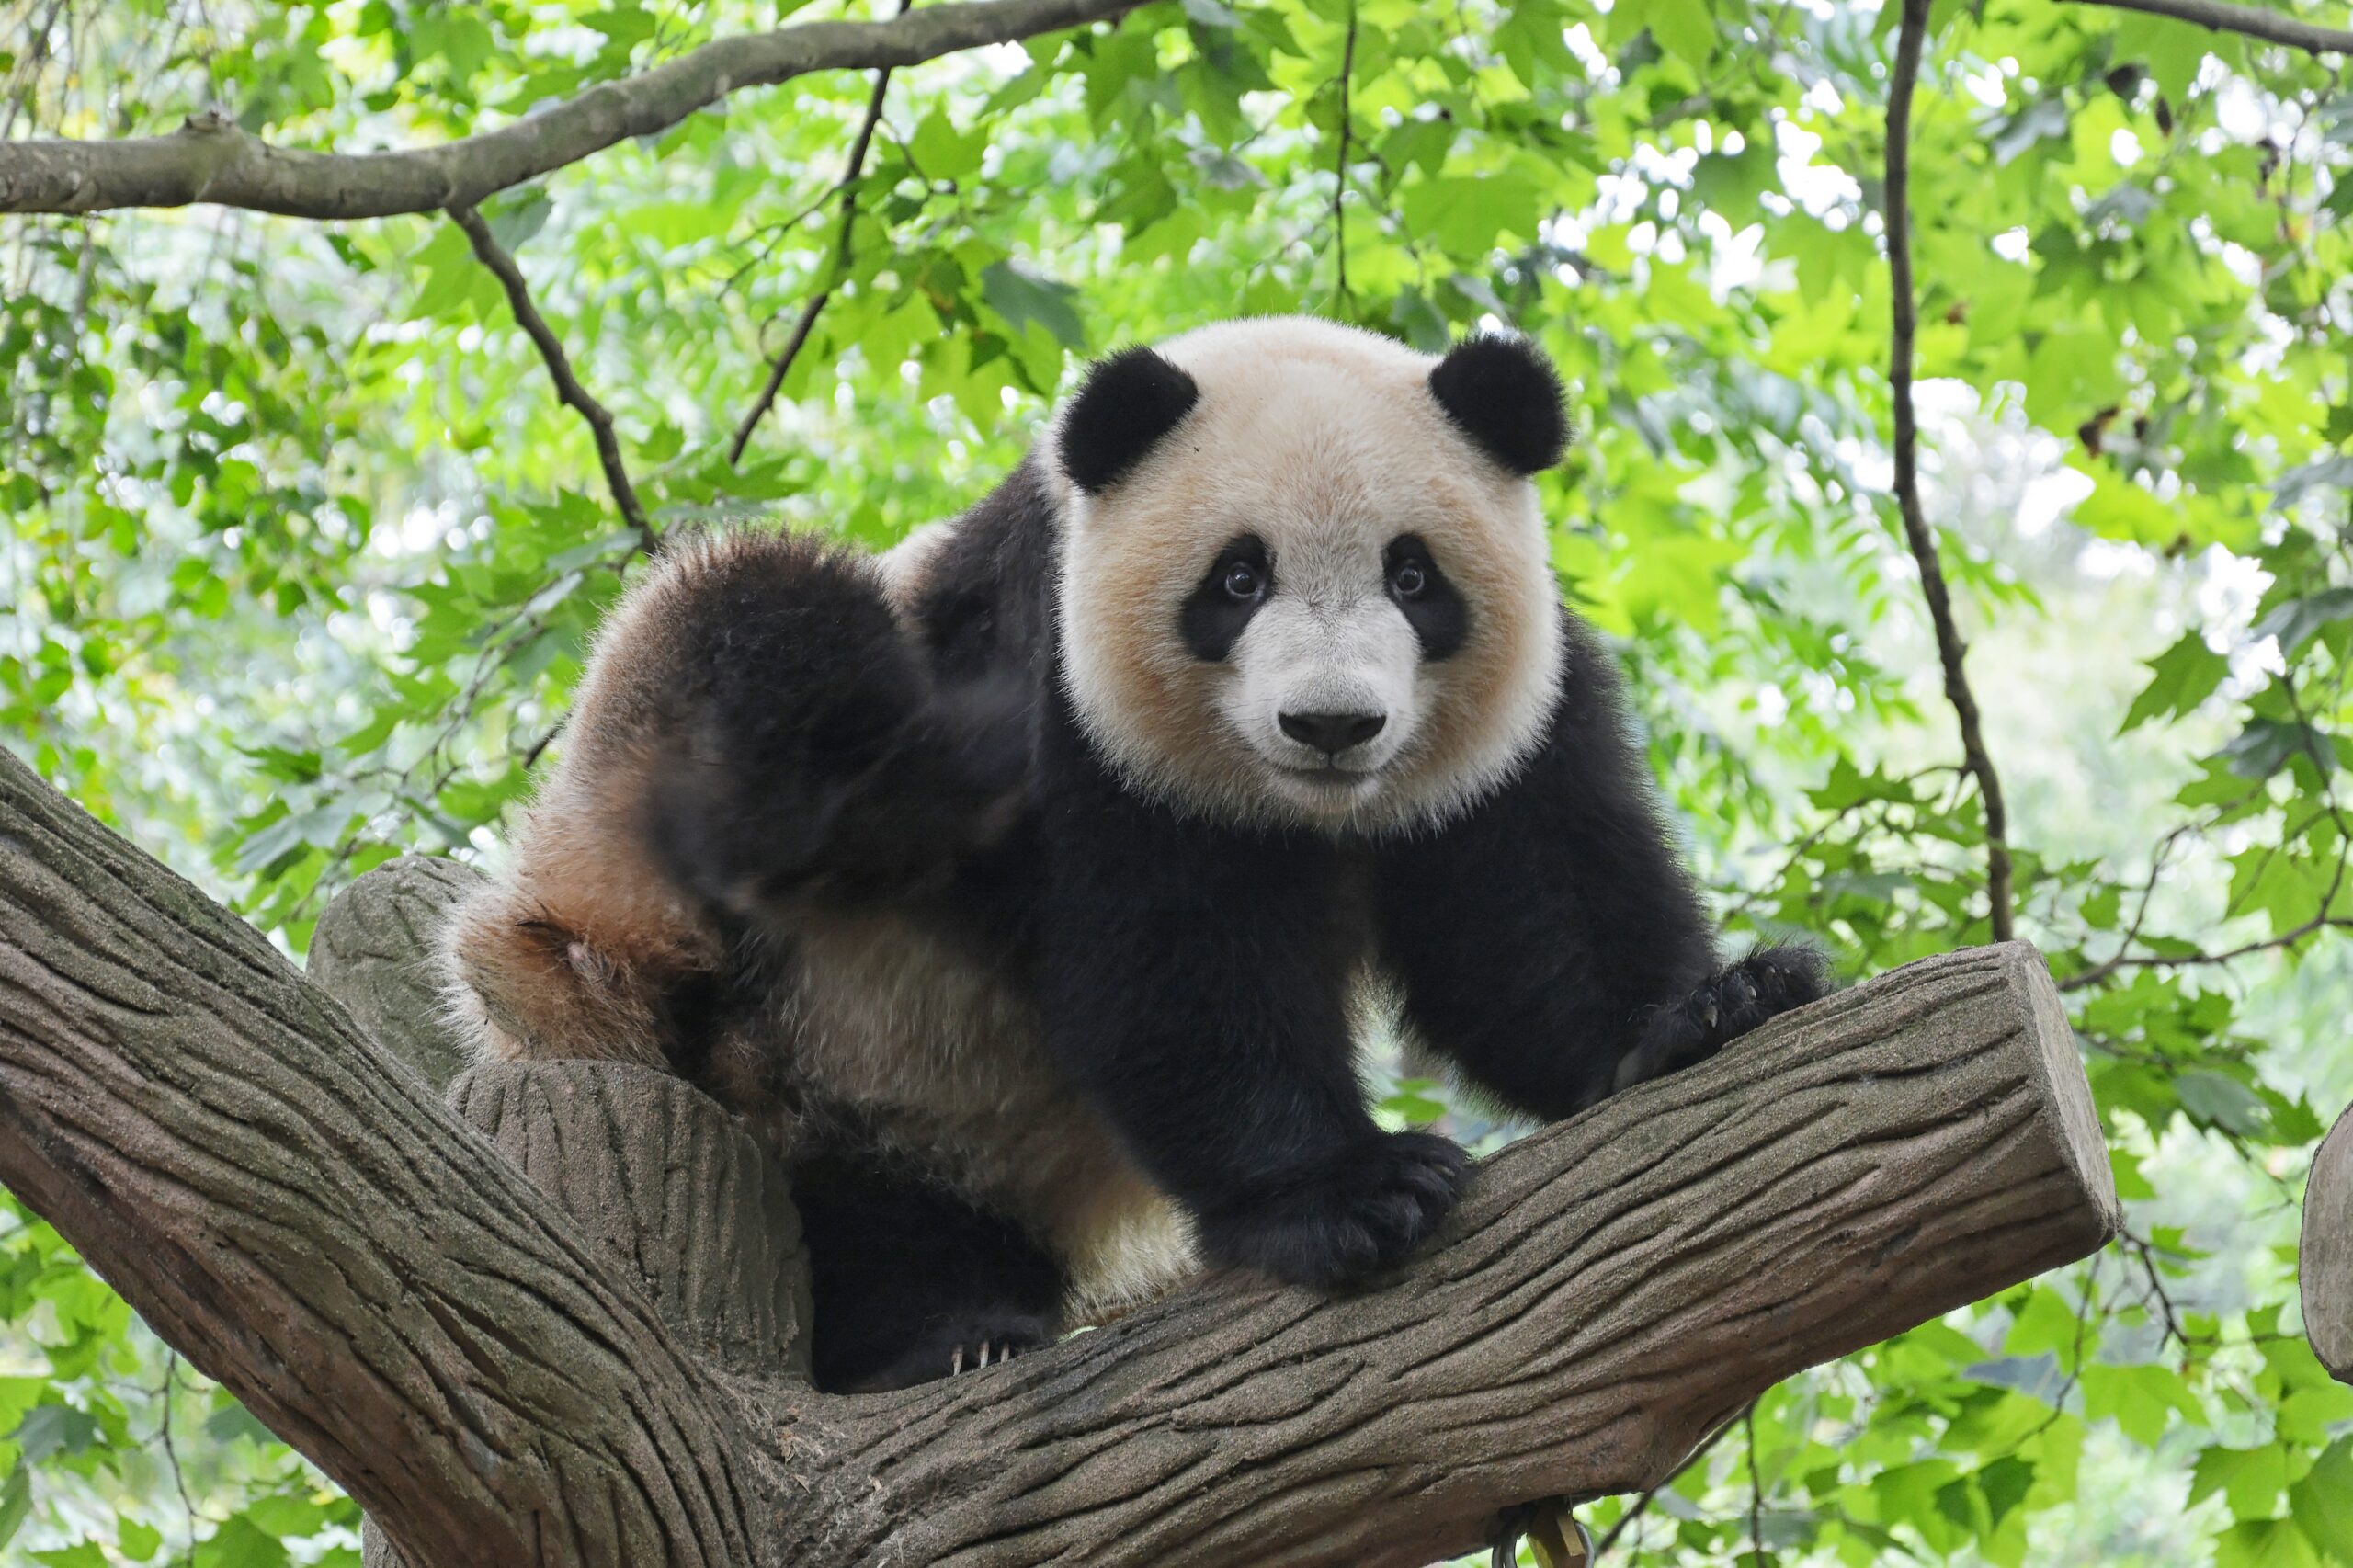 Panda/Photo by Bruce Hong